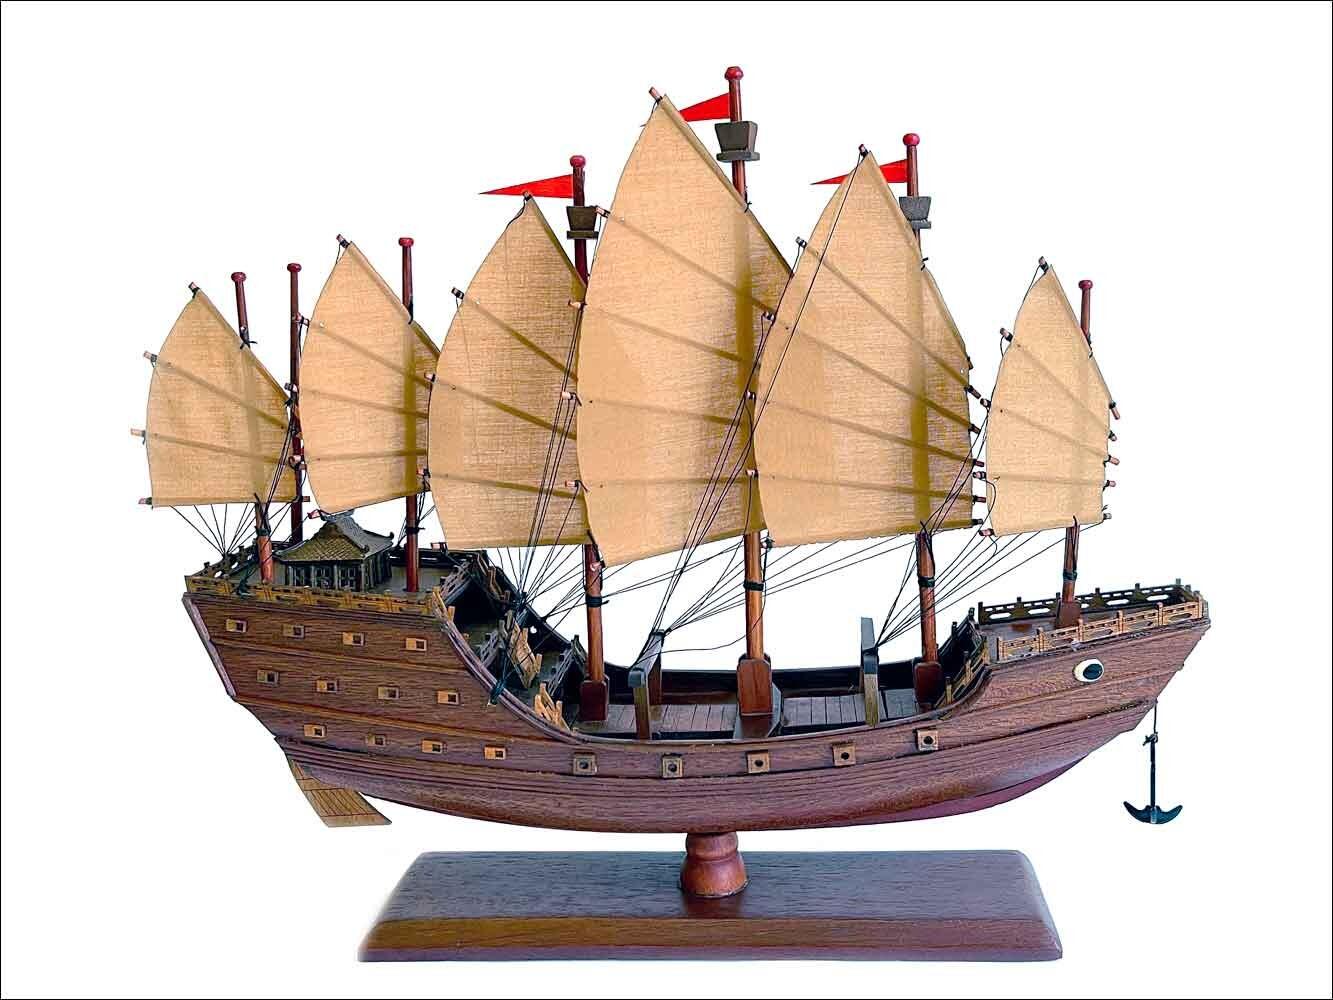 Junk model ship for display